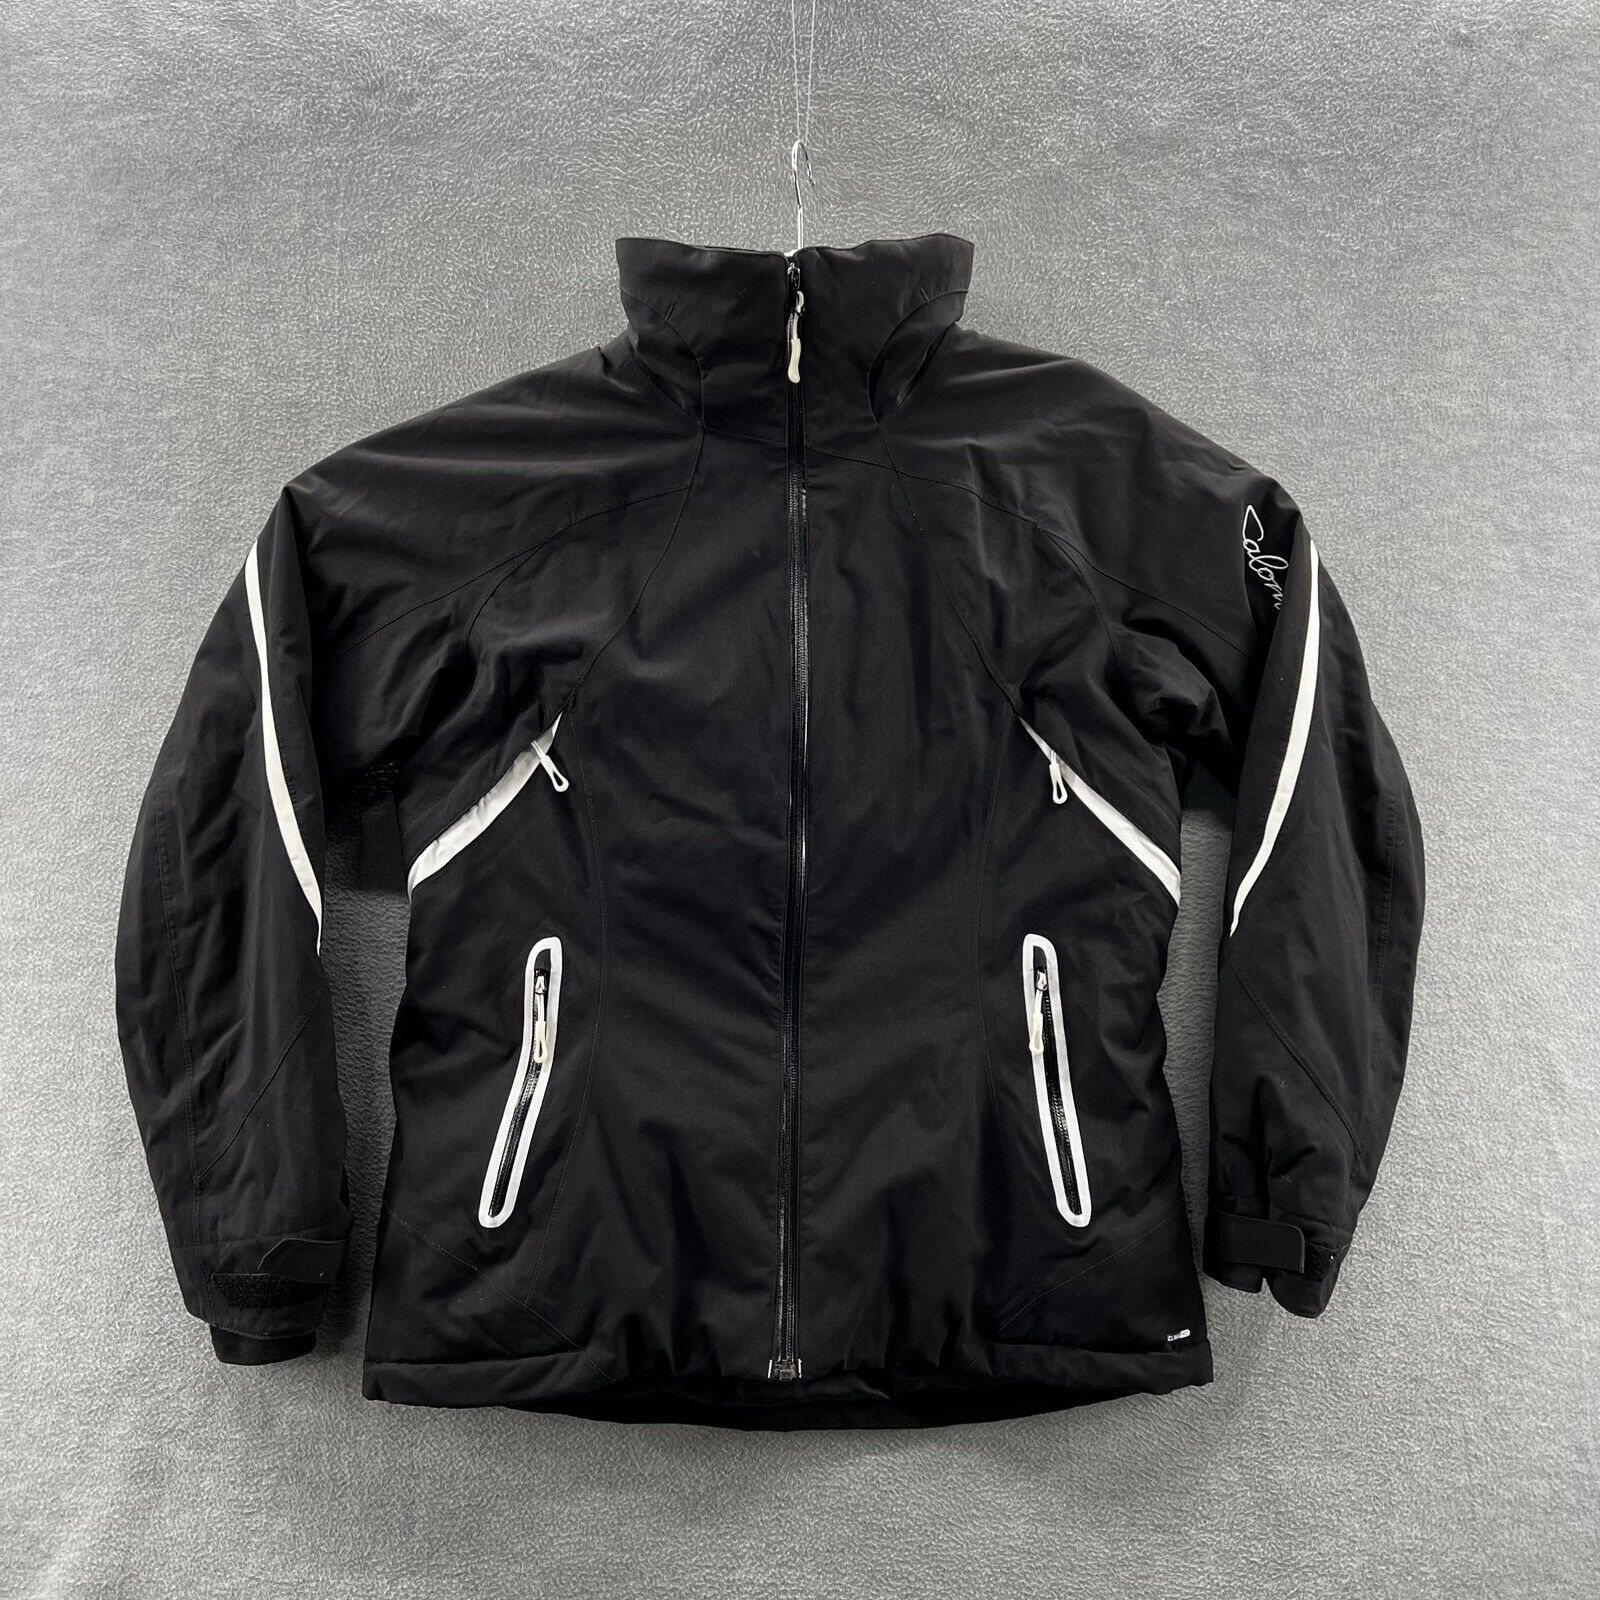 Informeer Motiveren Dempsey salomon clima pro 10,000 mm ski jacket size m | eBay